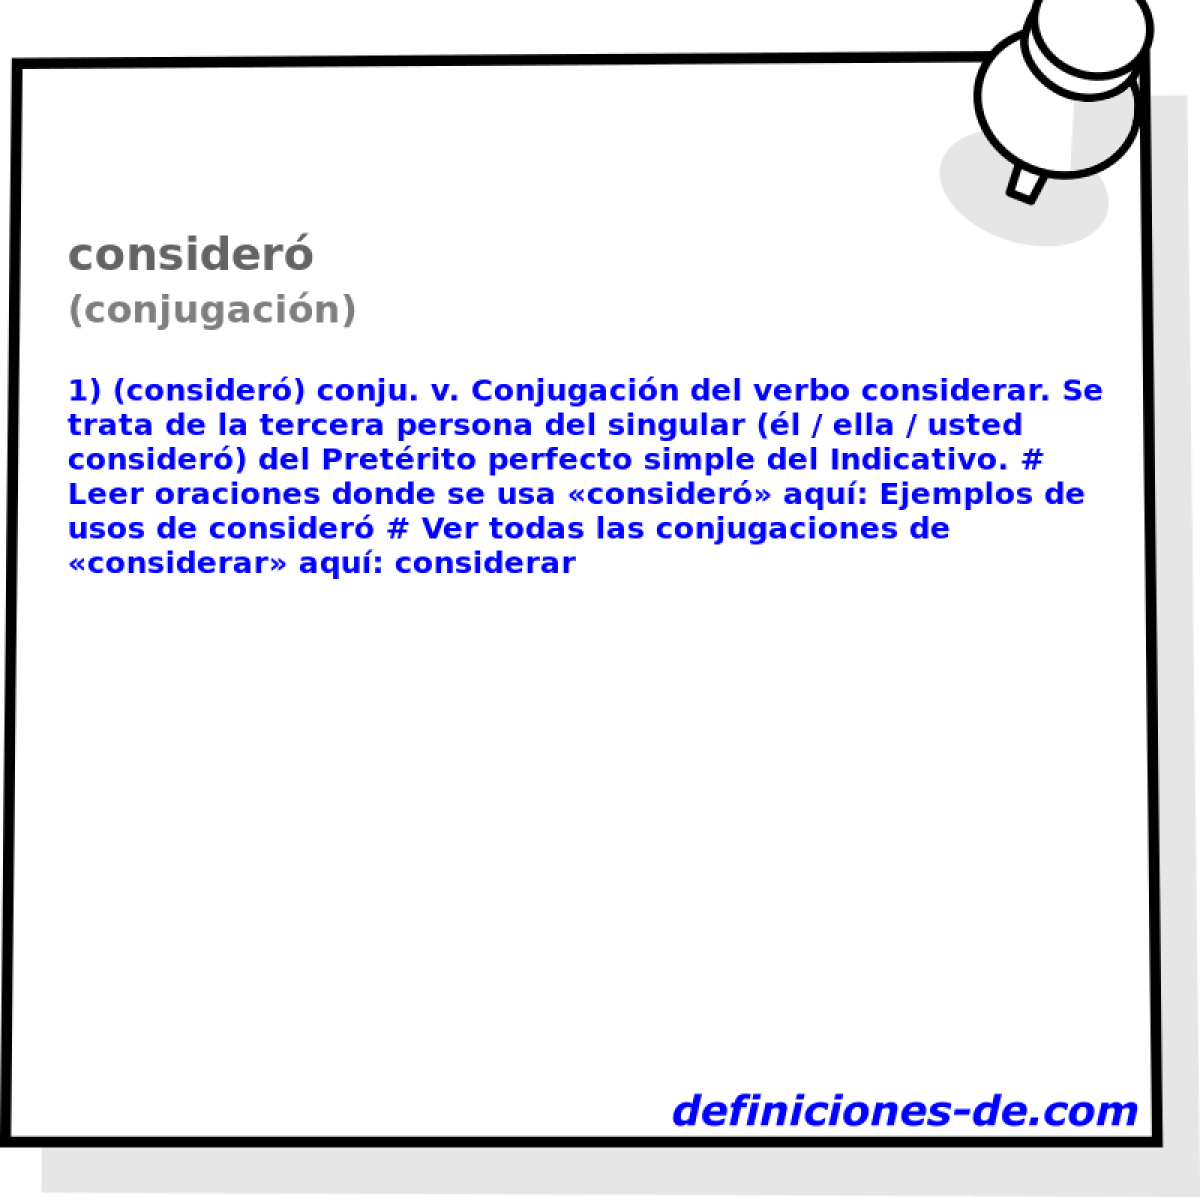 consider (conjugacin)